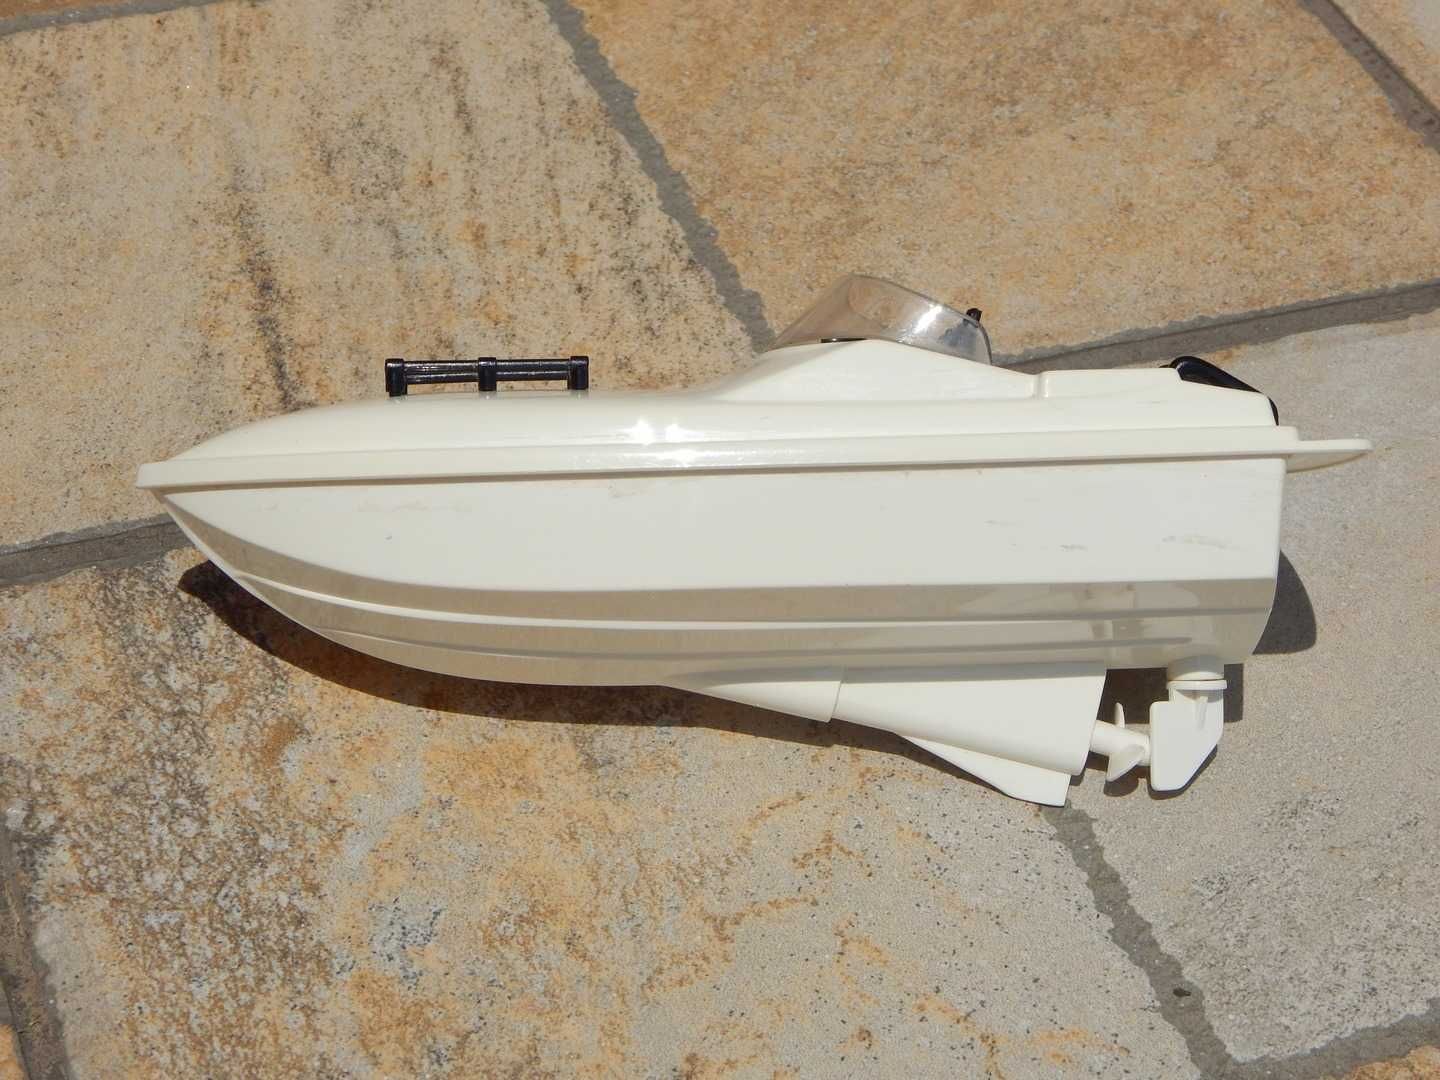 Macheta jucarie salupa barca plastic alba 19 cm lungime